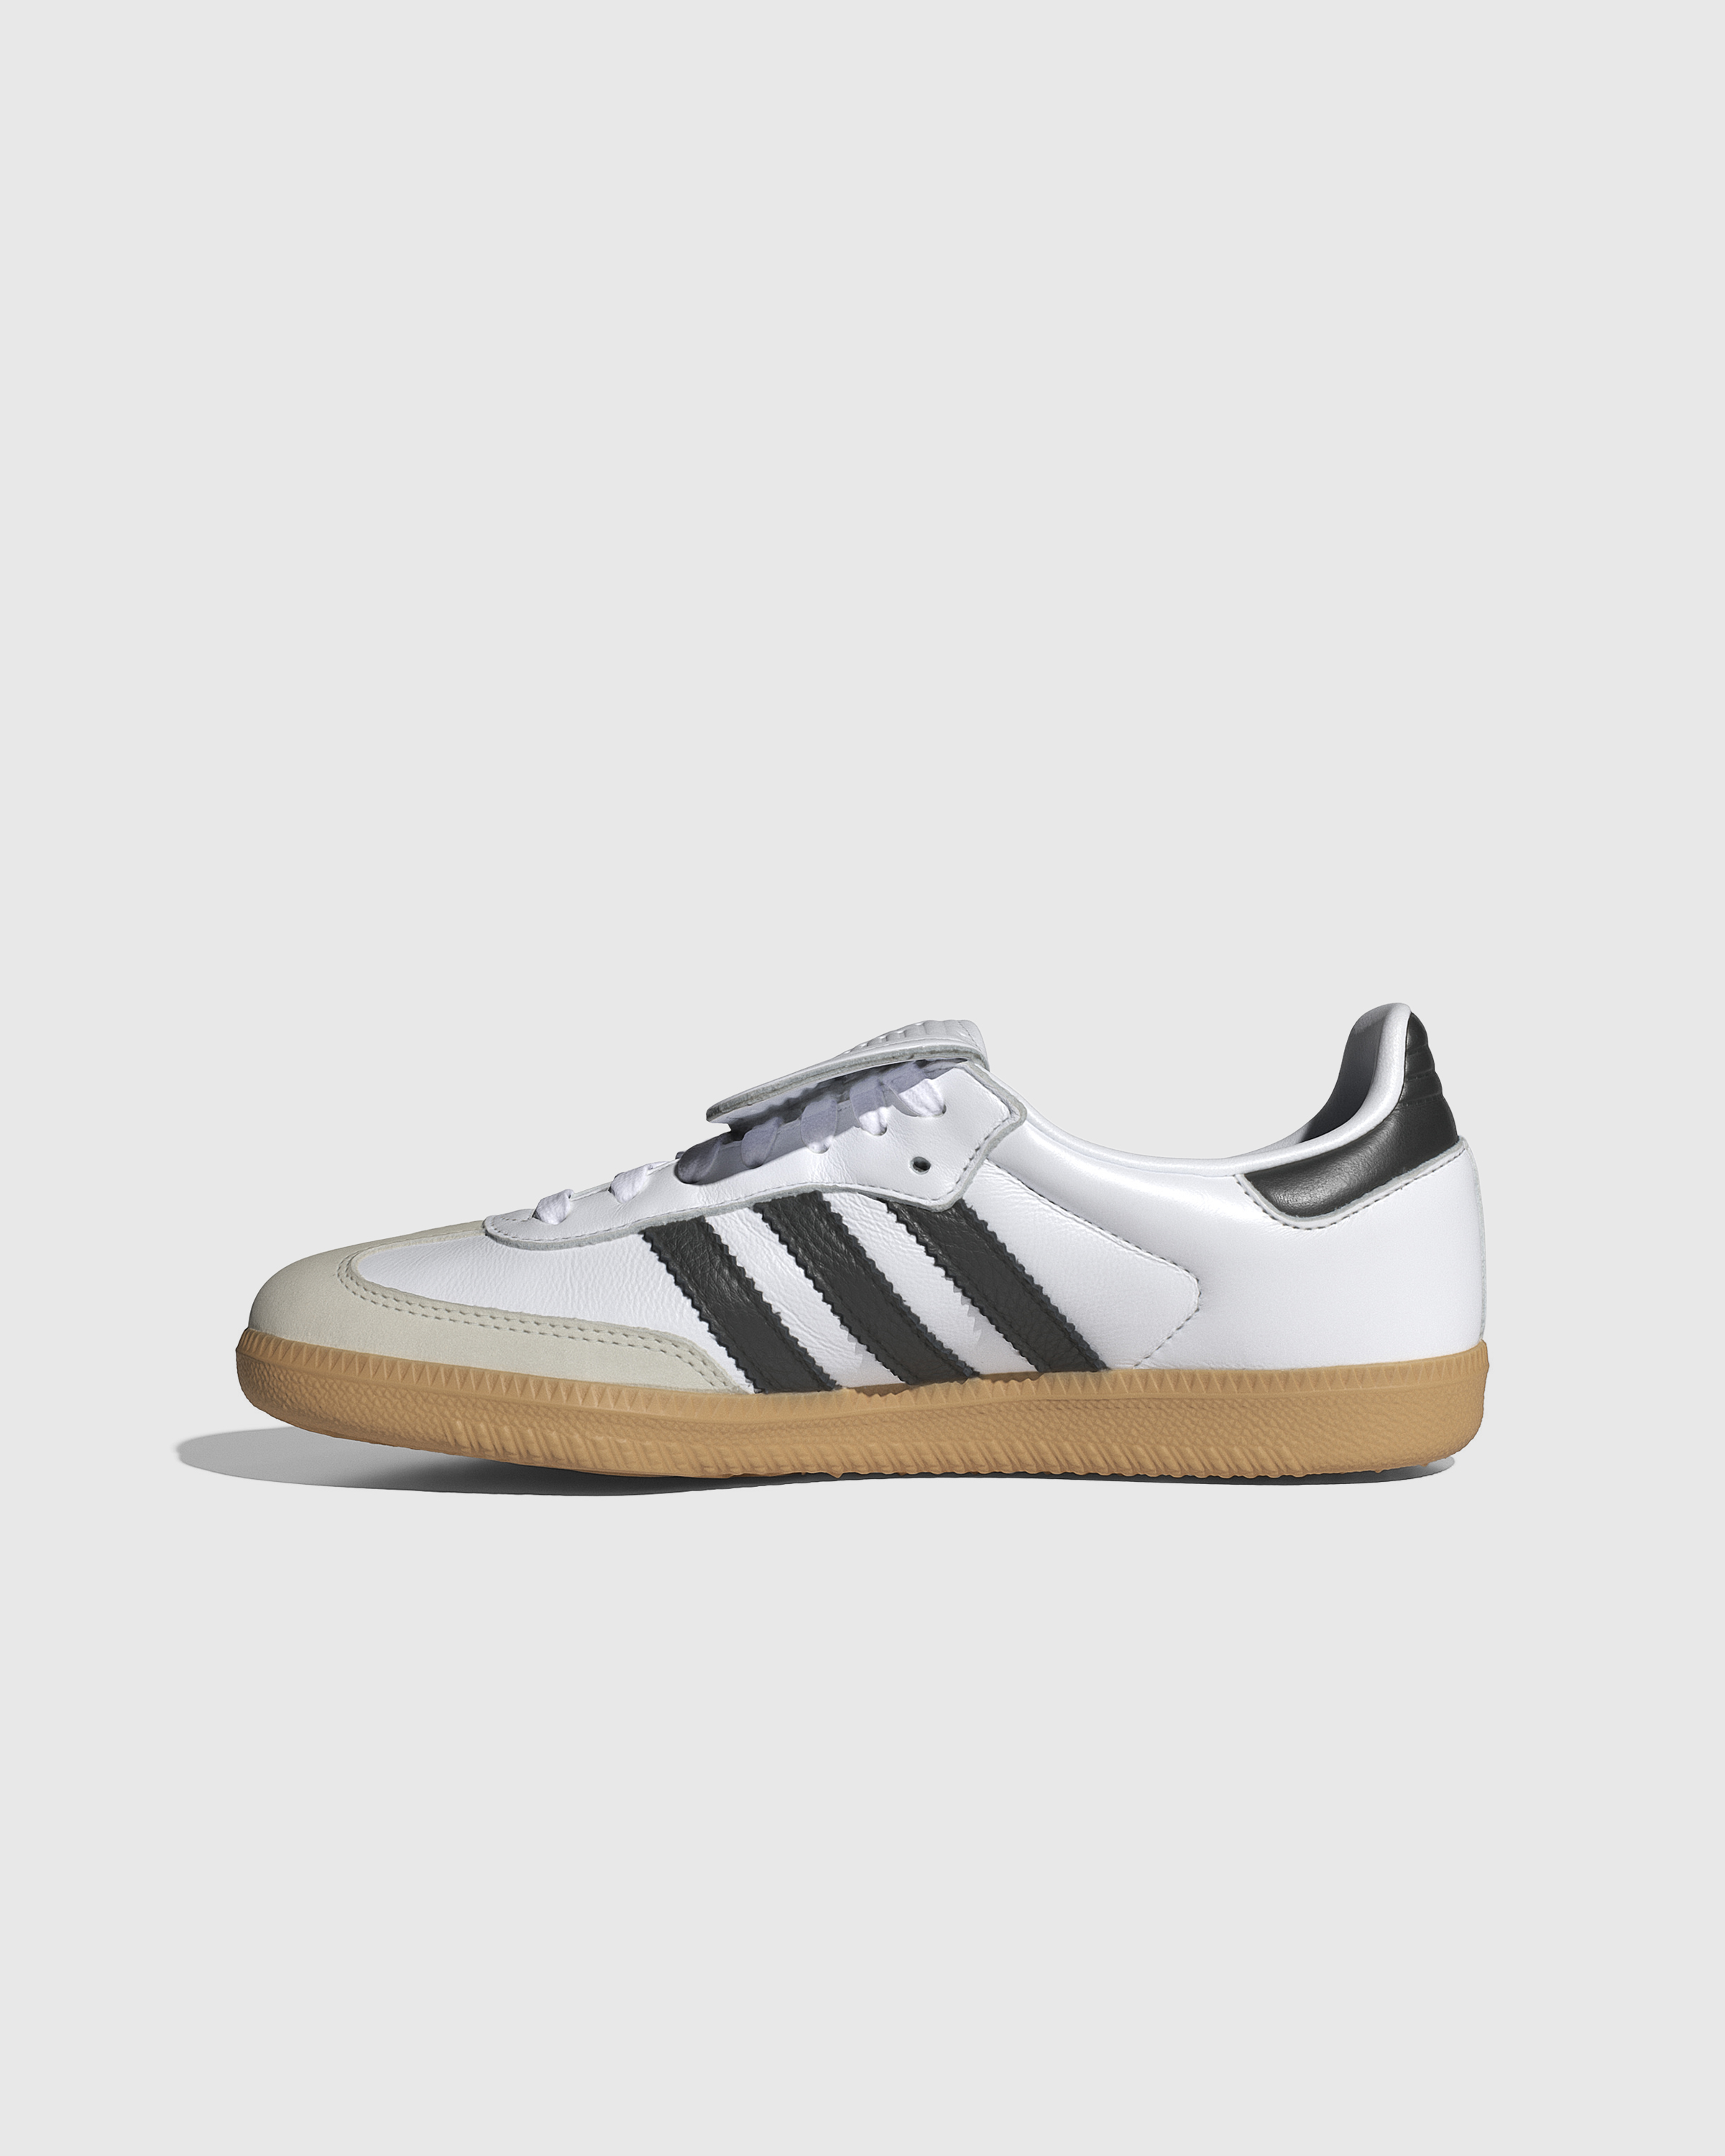 Adidas – Samba LT W White/Black/Gold - Low Top Sneakers - White - Image 2